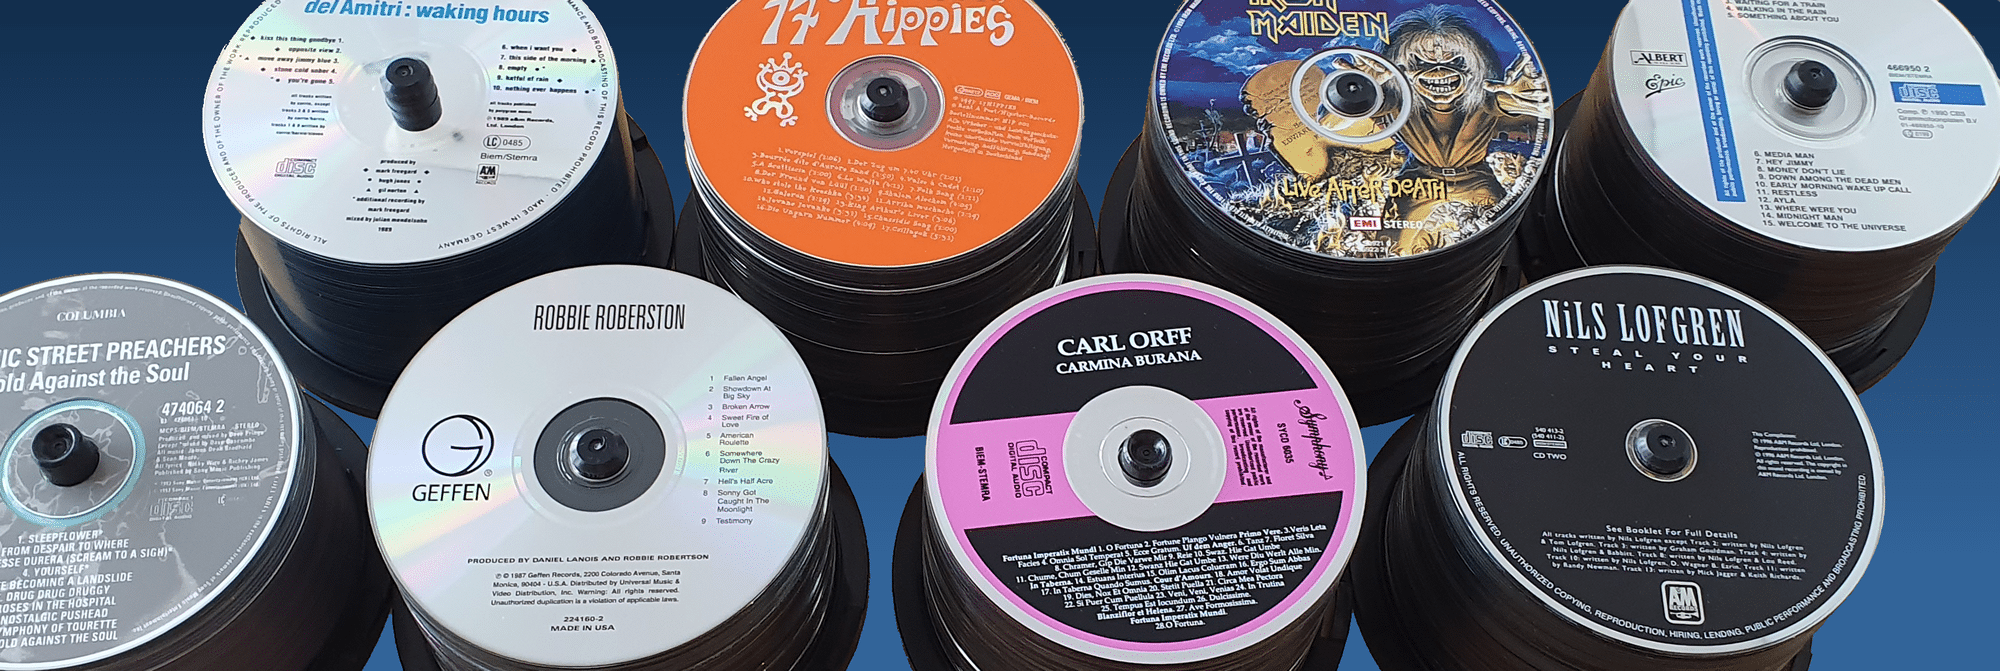 CDs rippen, CD-Sammlung einlesen